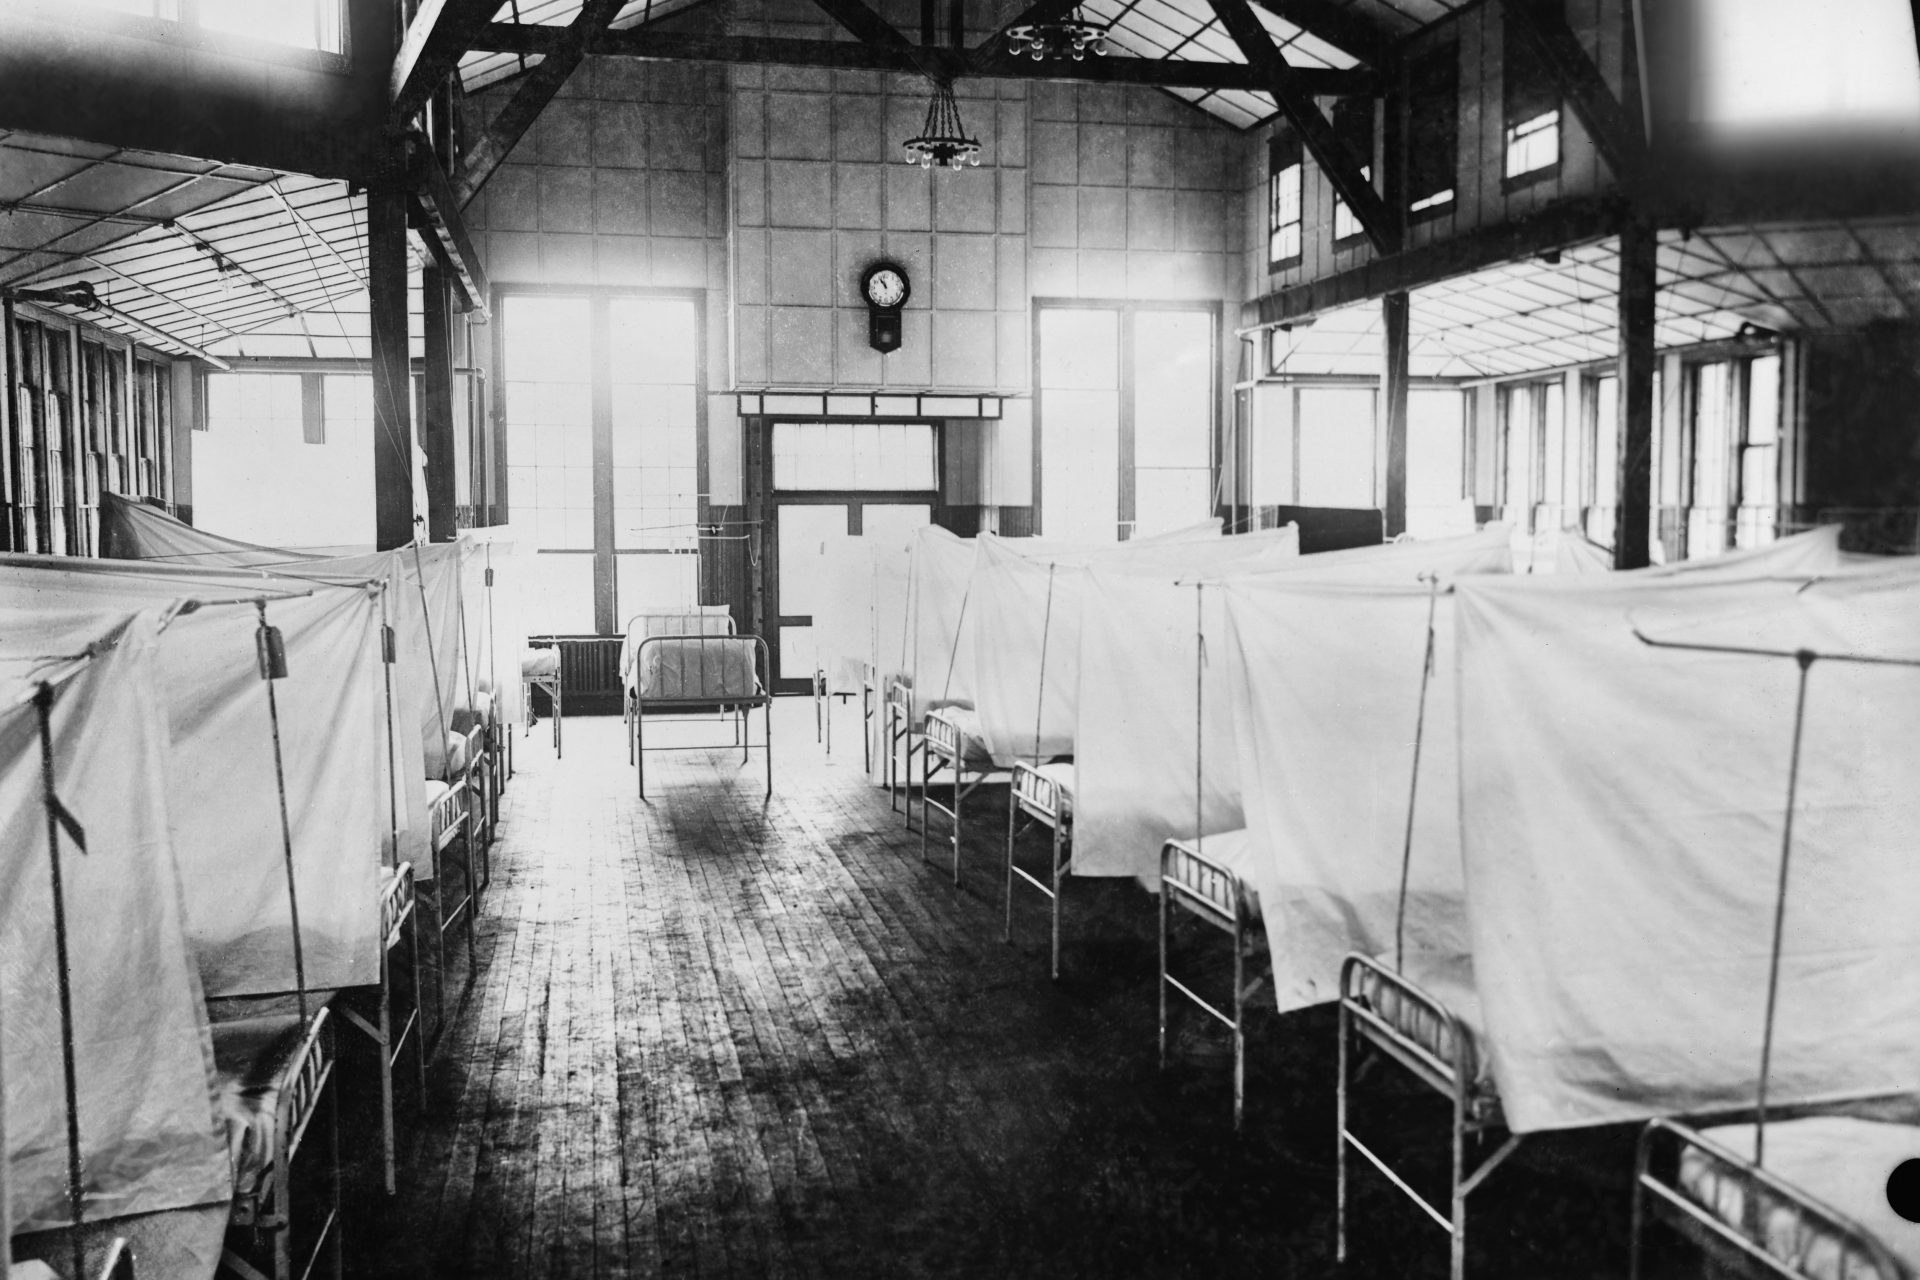 Spanish Flu (Influenza), 1918-1920